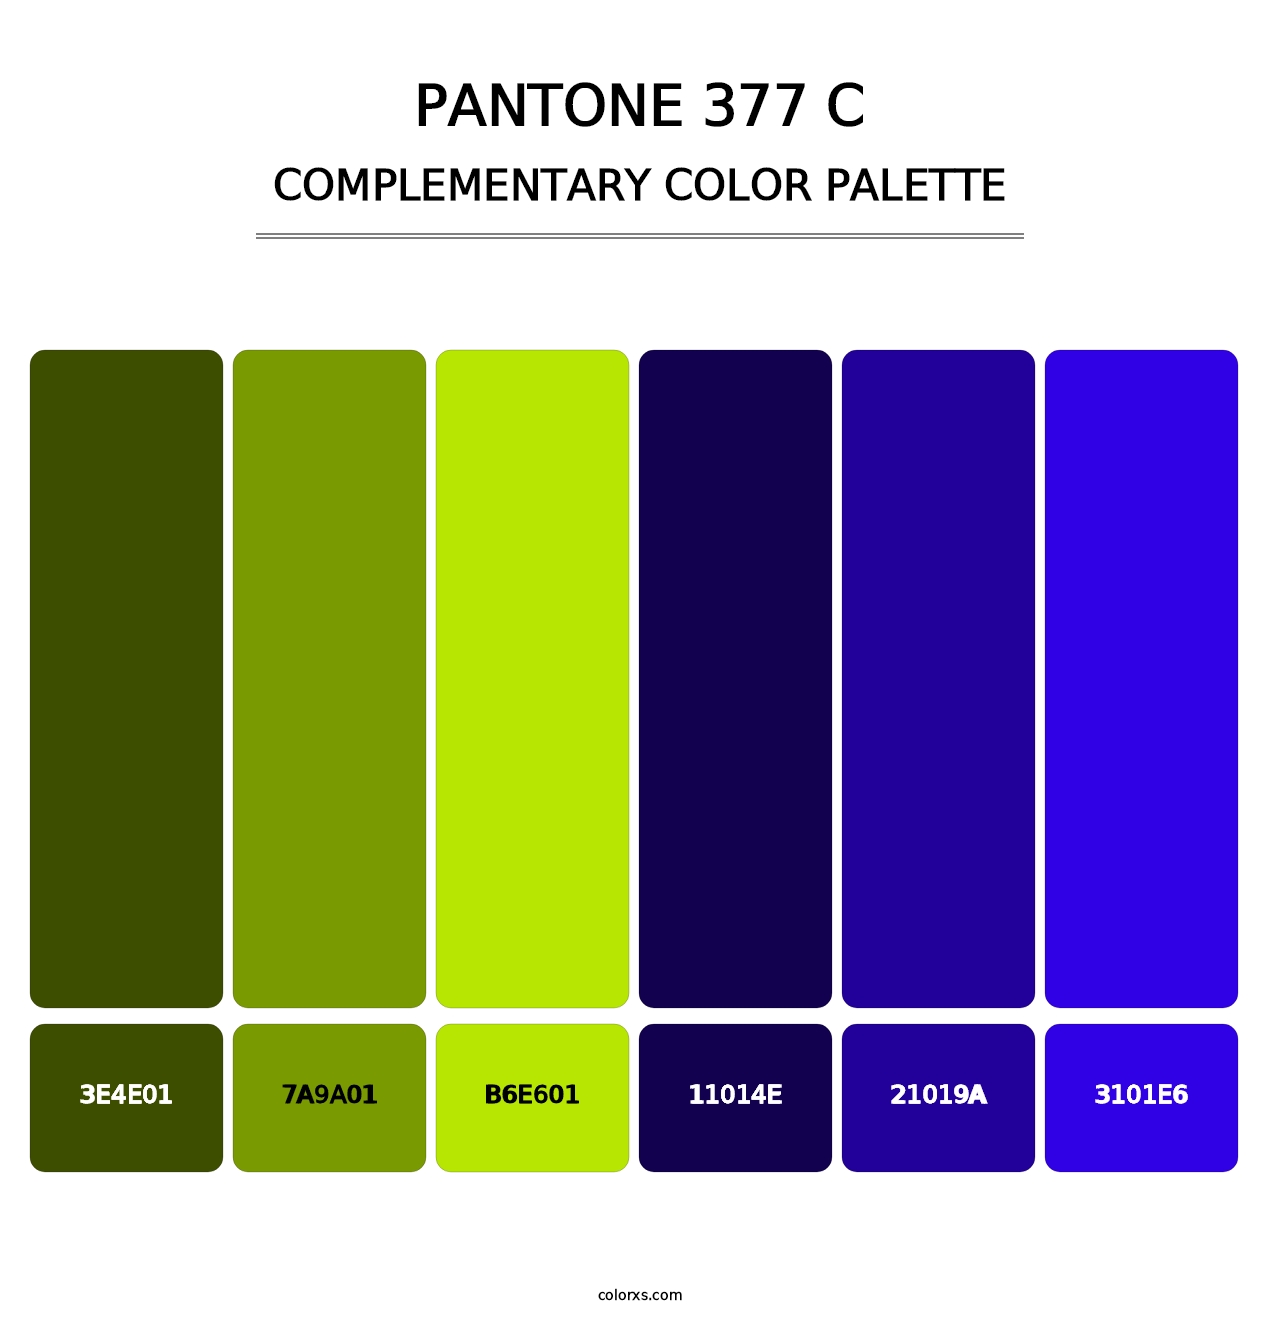 PANTONE 377 C - Complementary Color Palette